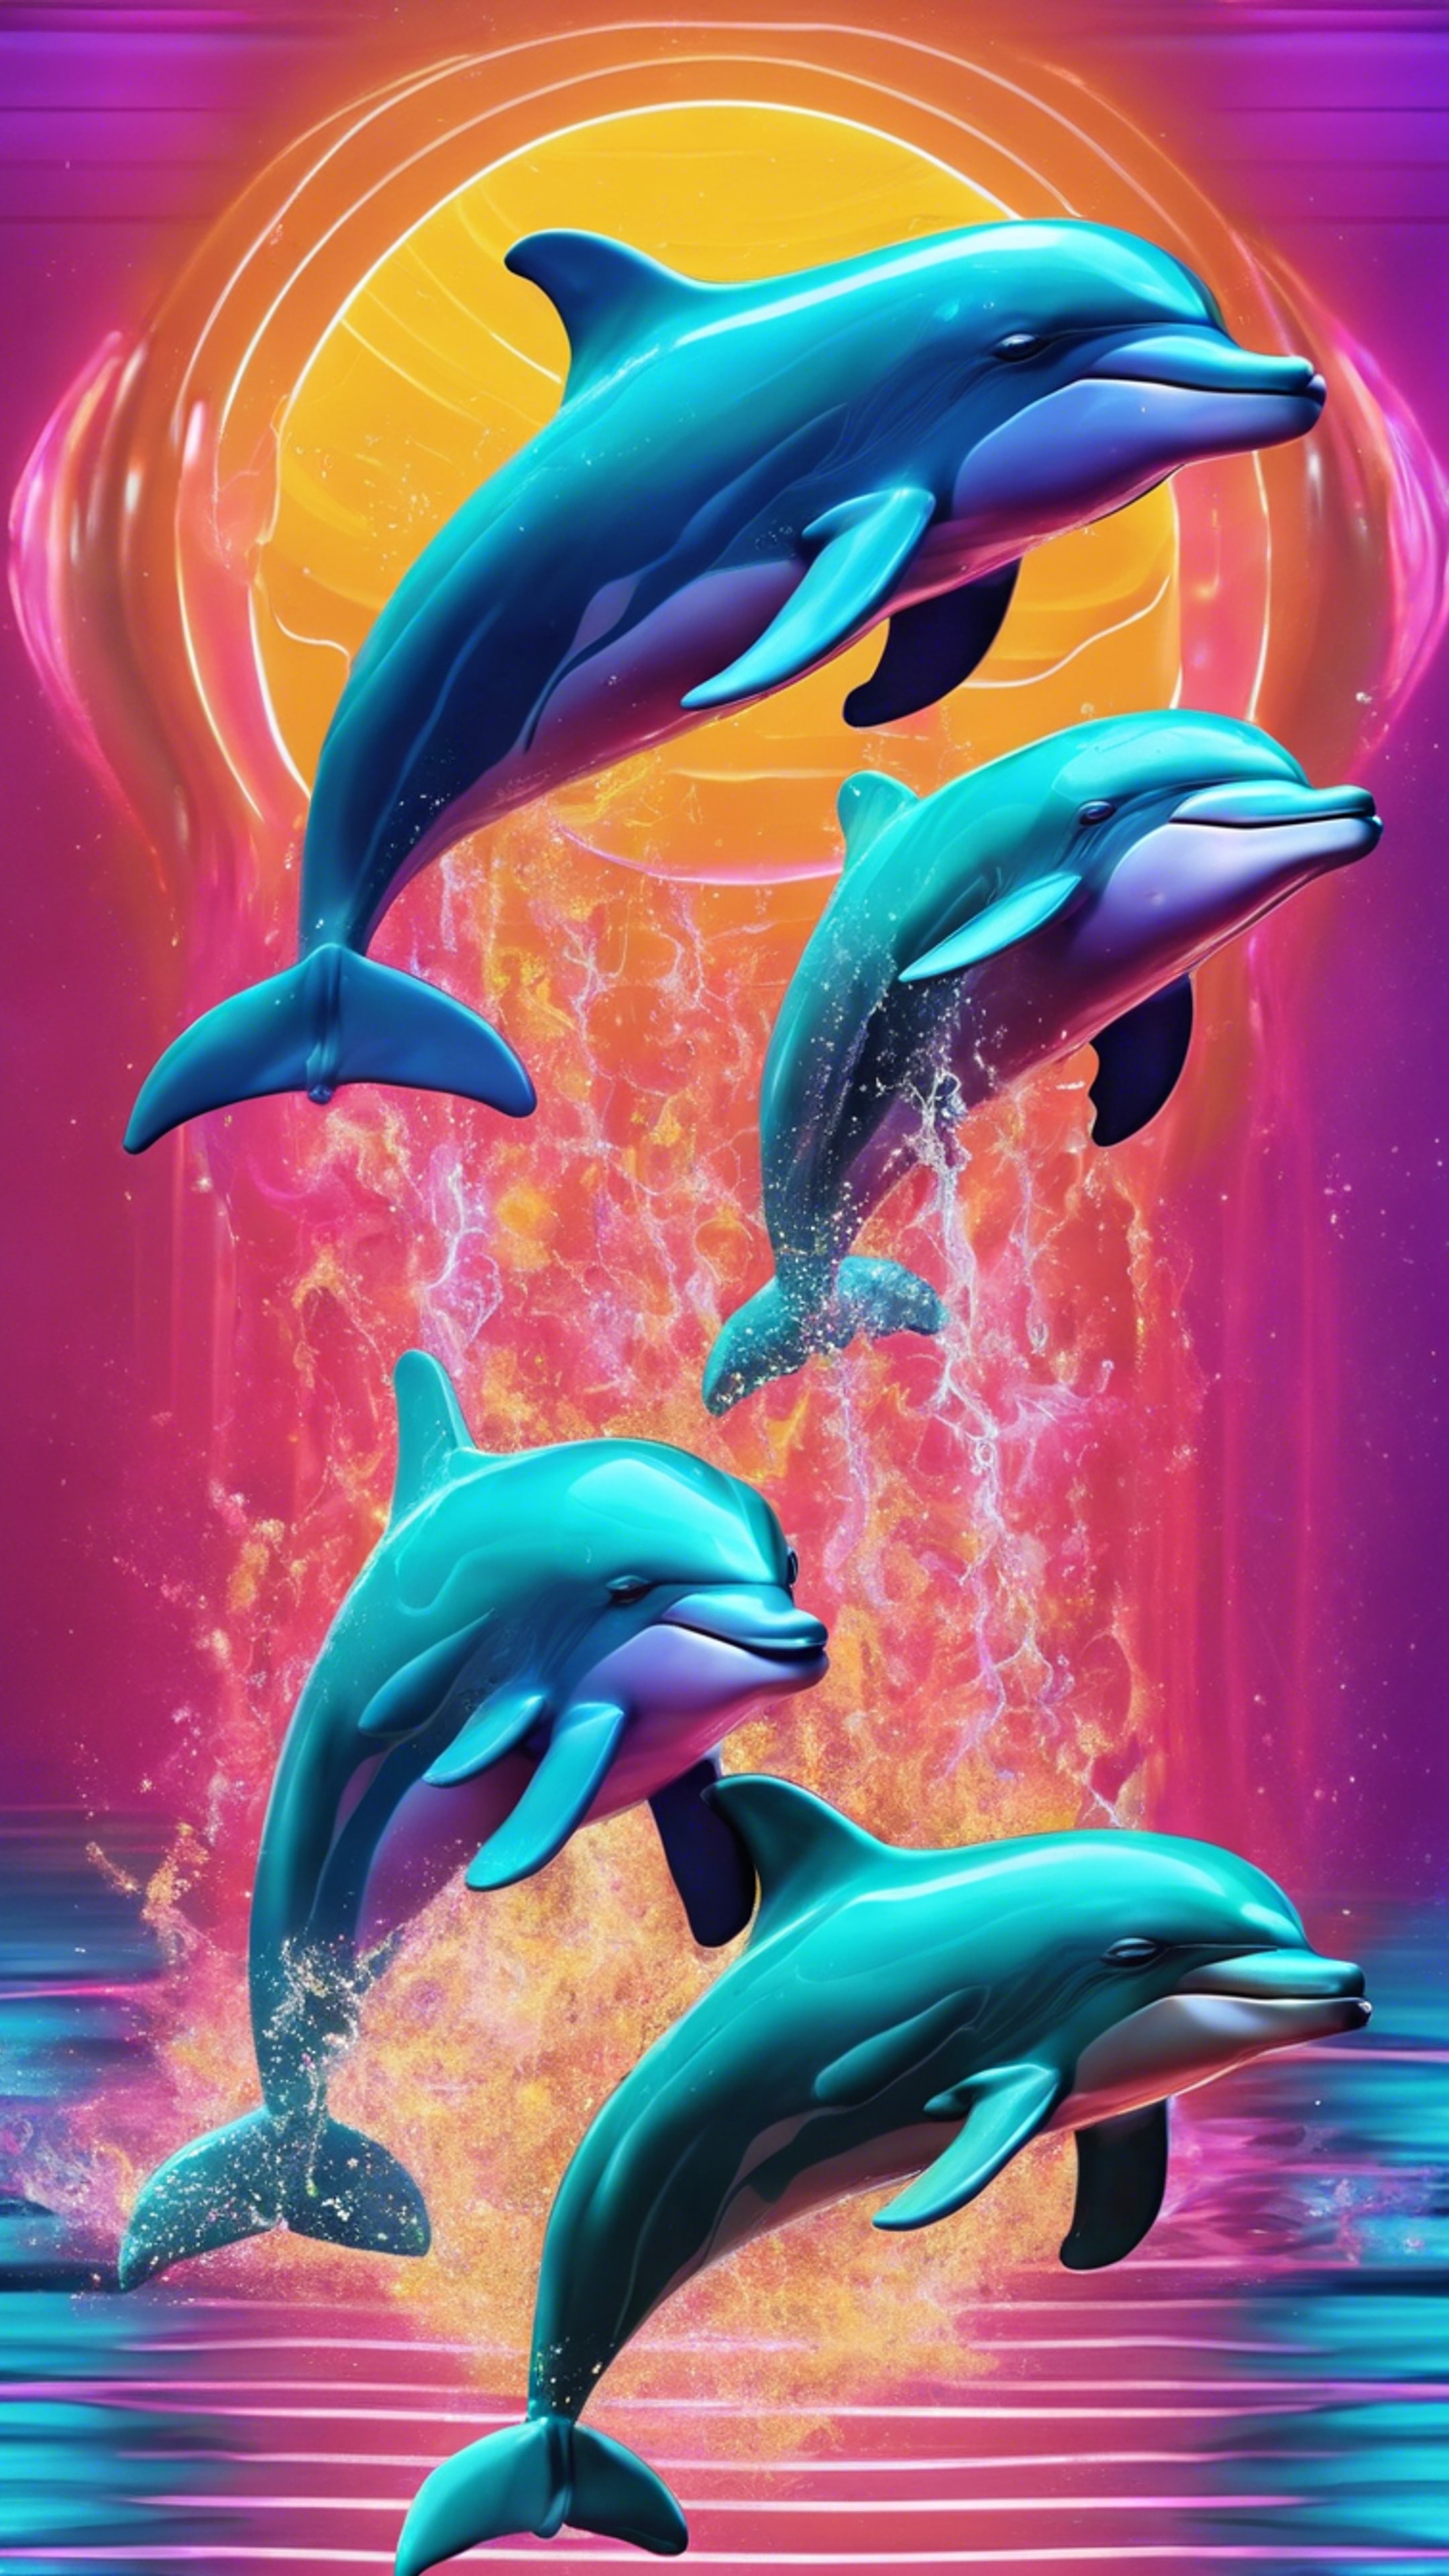 Robotic Y2K dolphins leaping over neon waves in a digital ocean. Hintergrund[ad0dac3c3f9a44adb514]